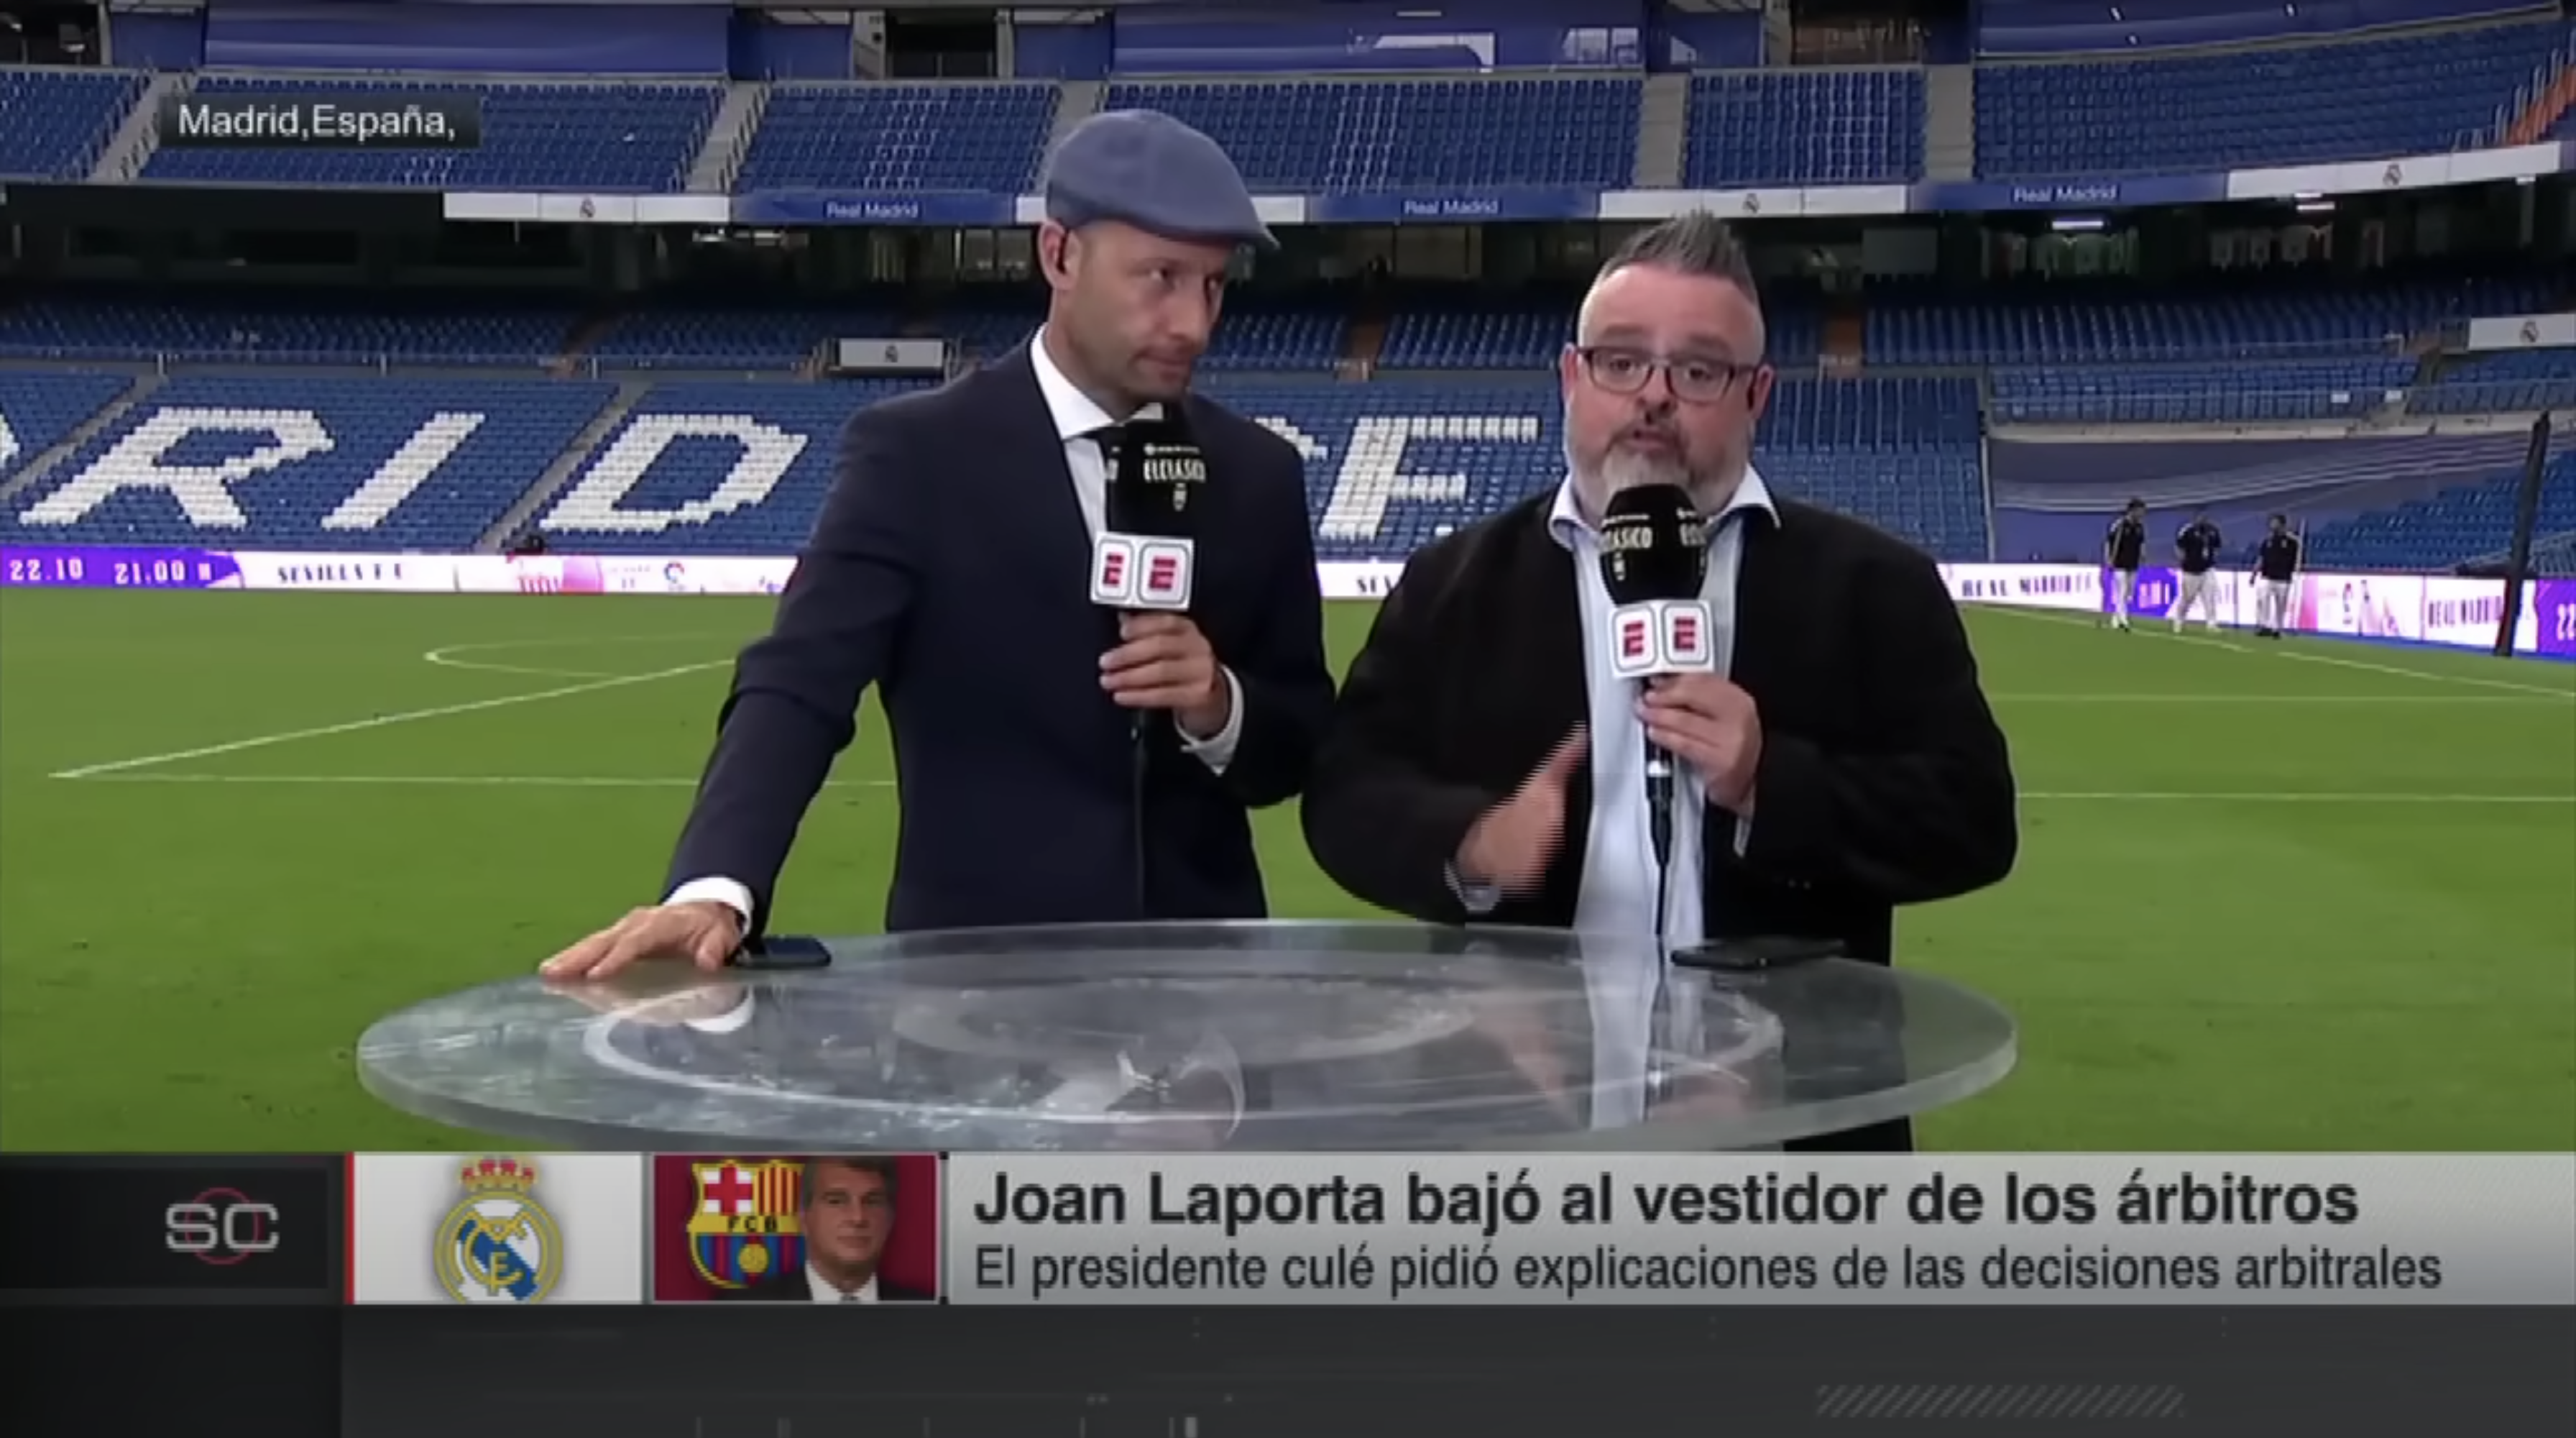 ESPN Ships La Liga Studio Coverage, Commentary to Madrid for ESPAÑA Week